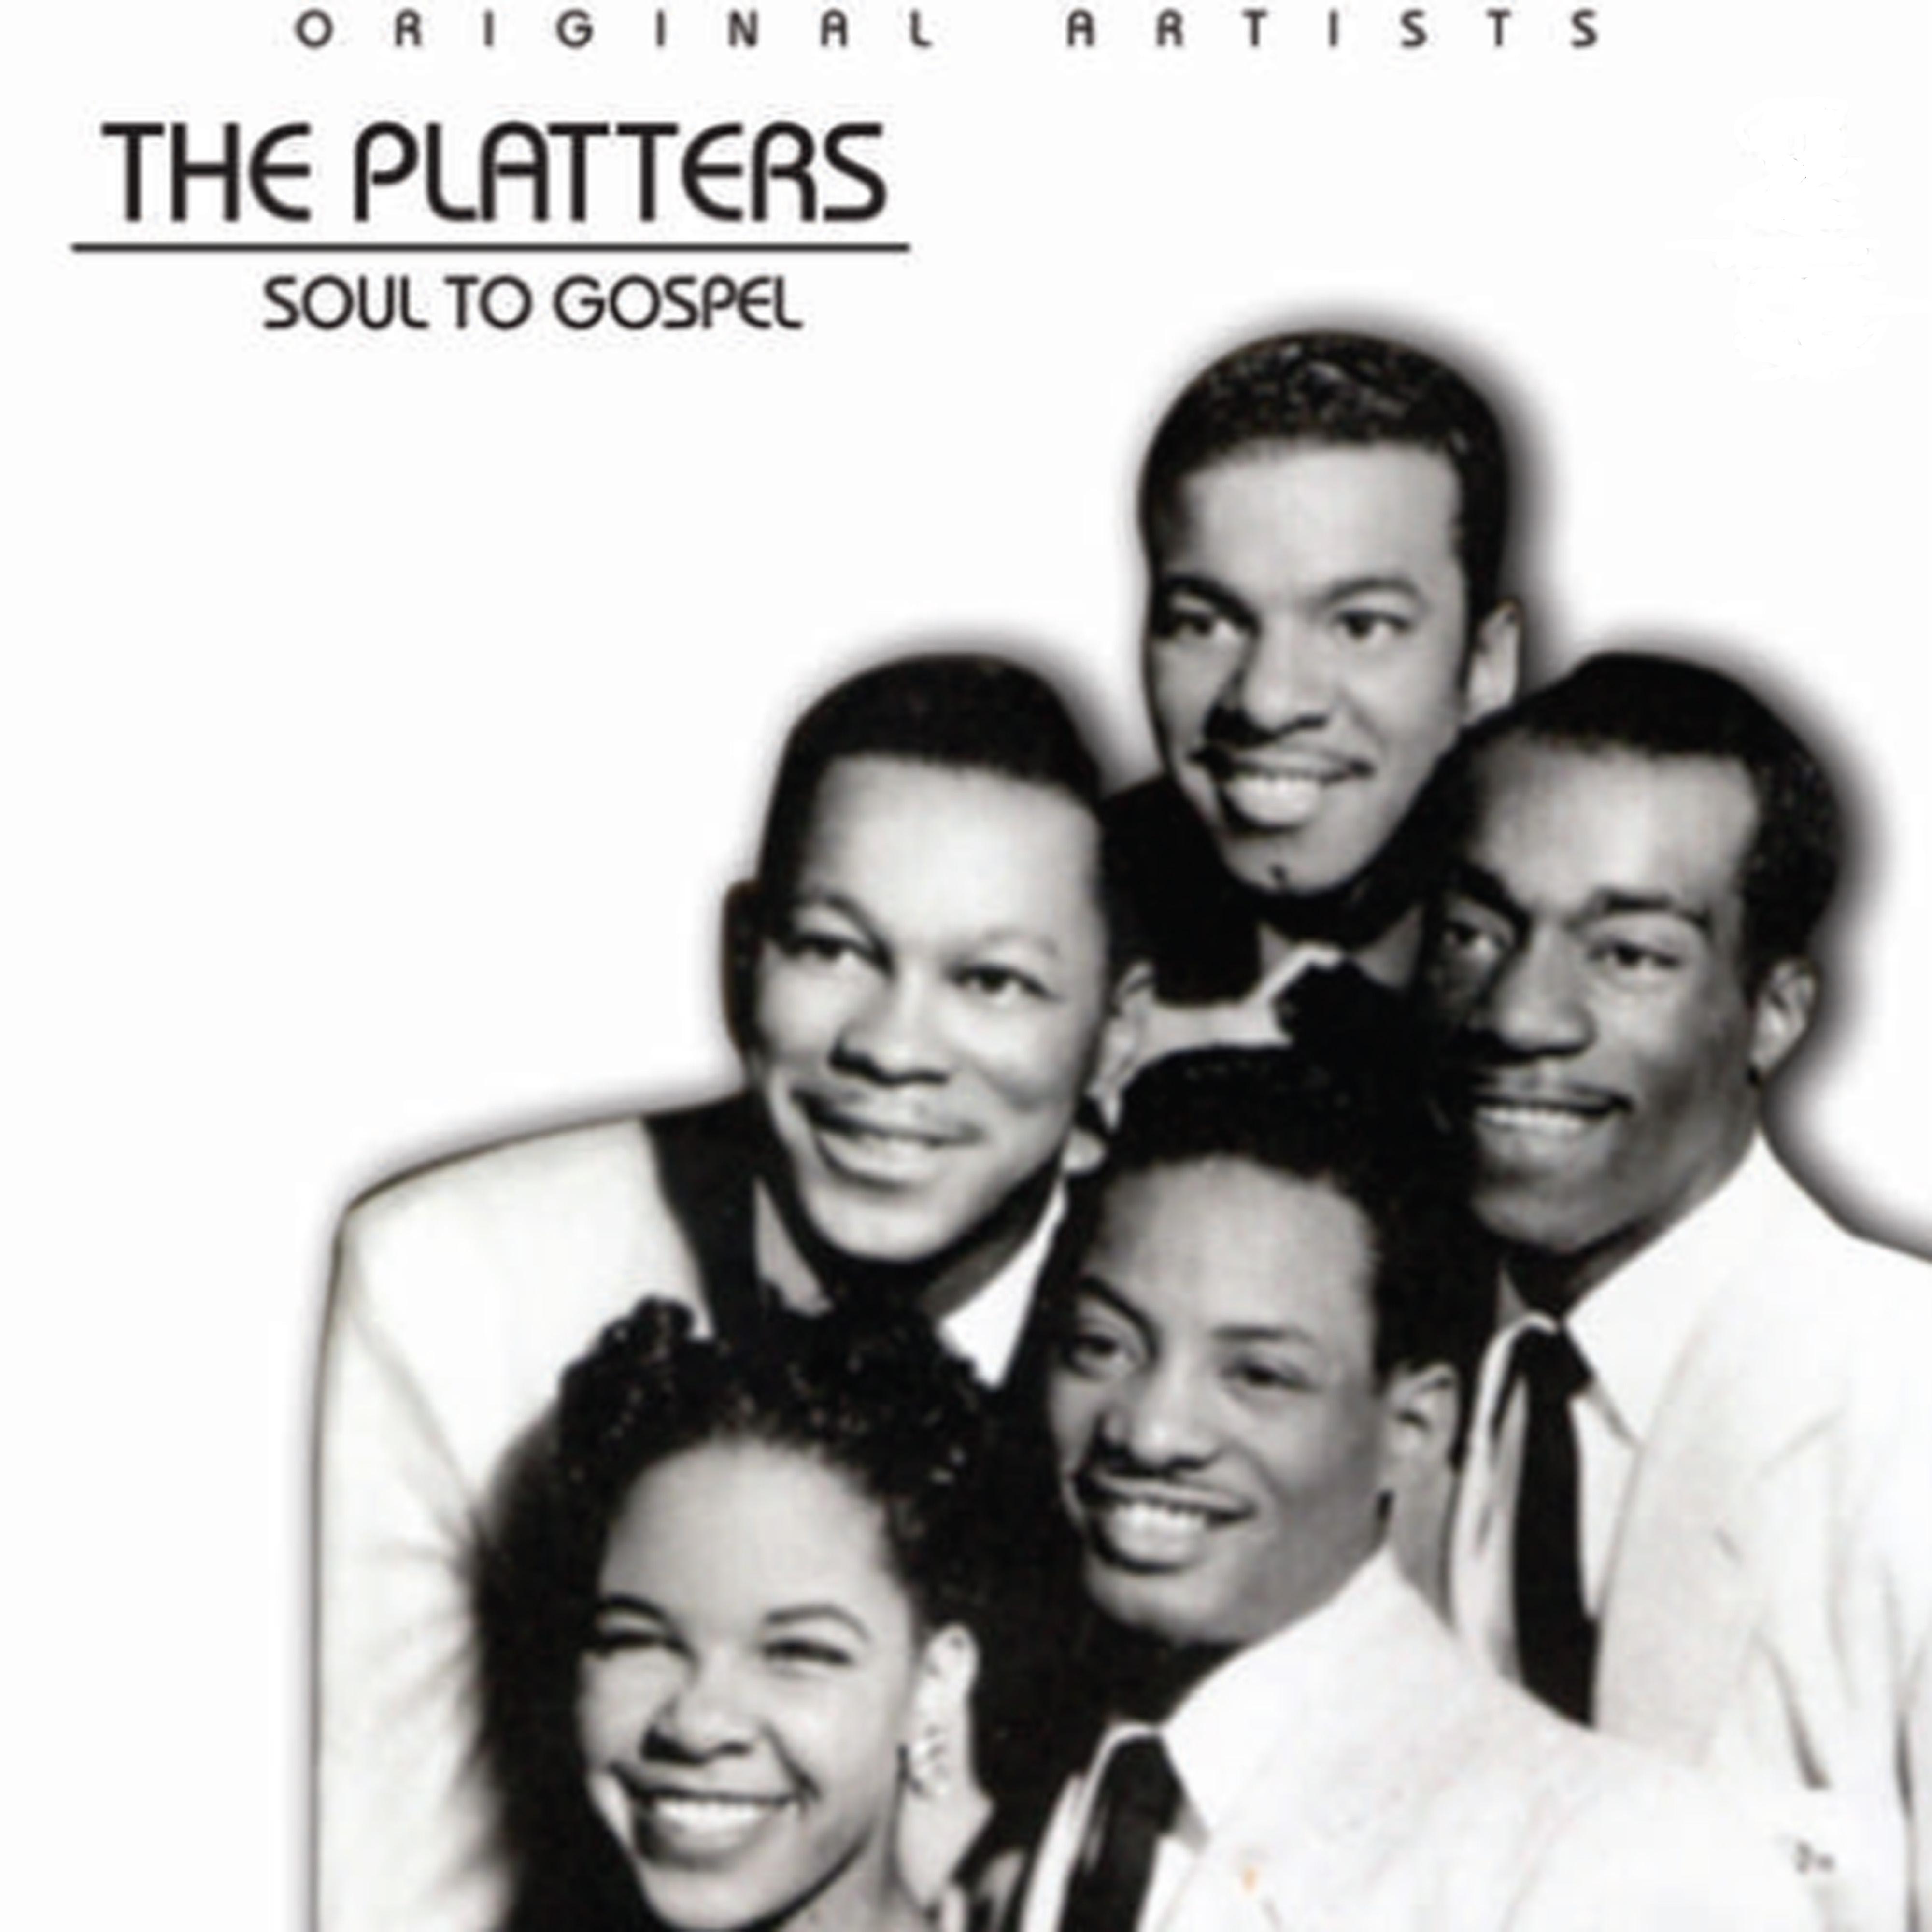 The Platters - Soul to Gospel